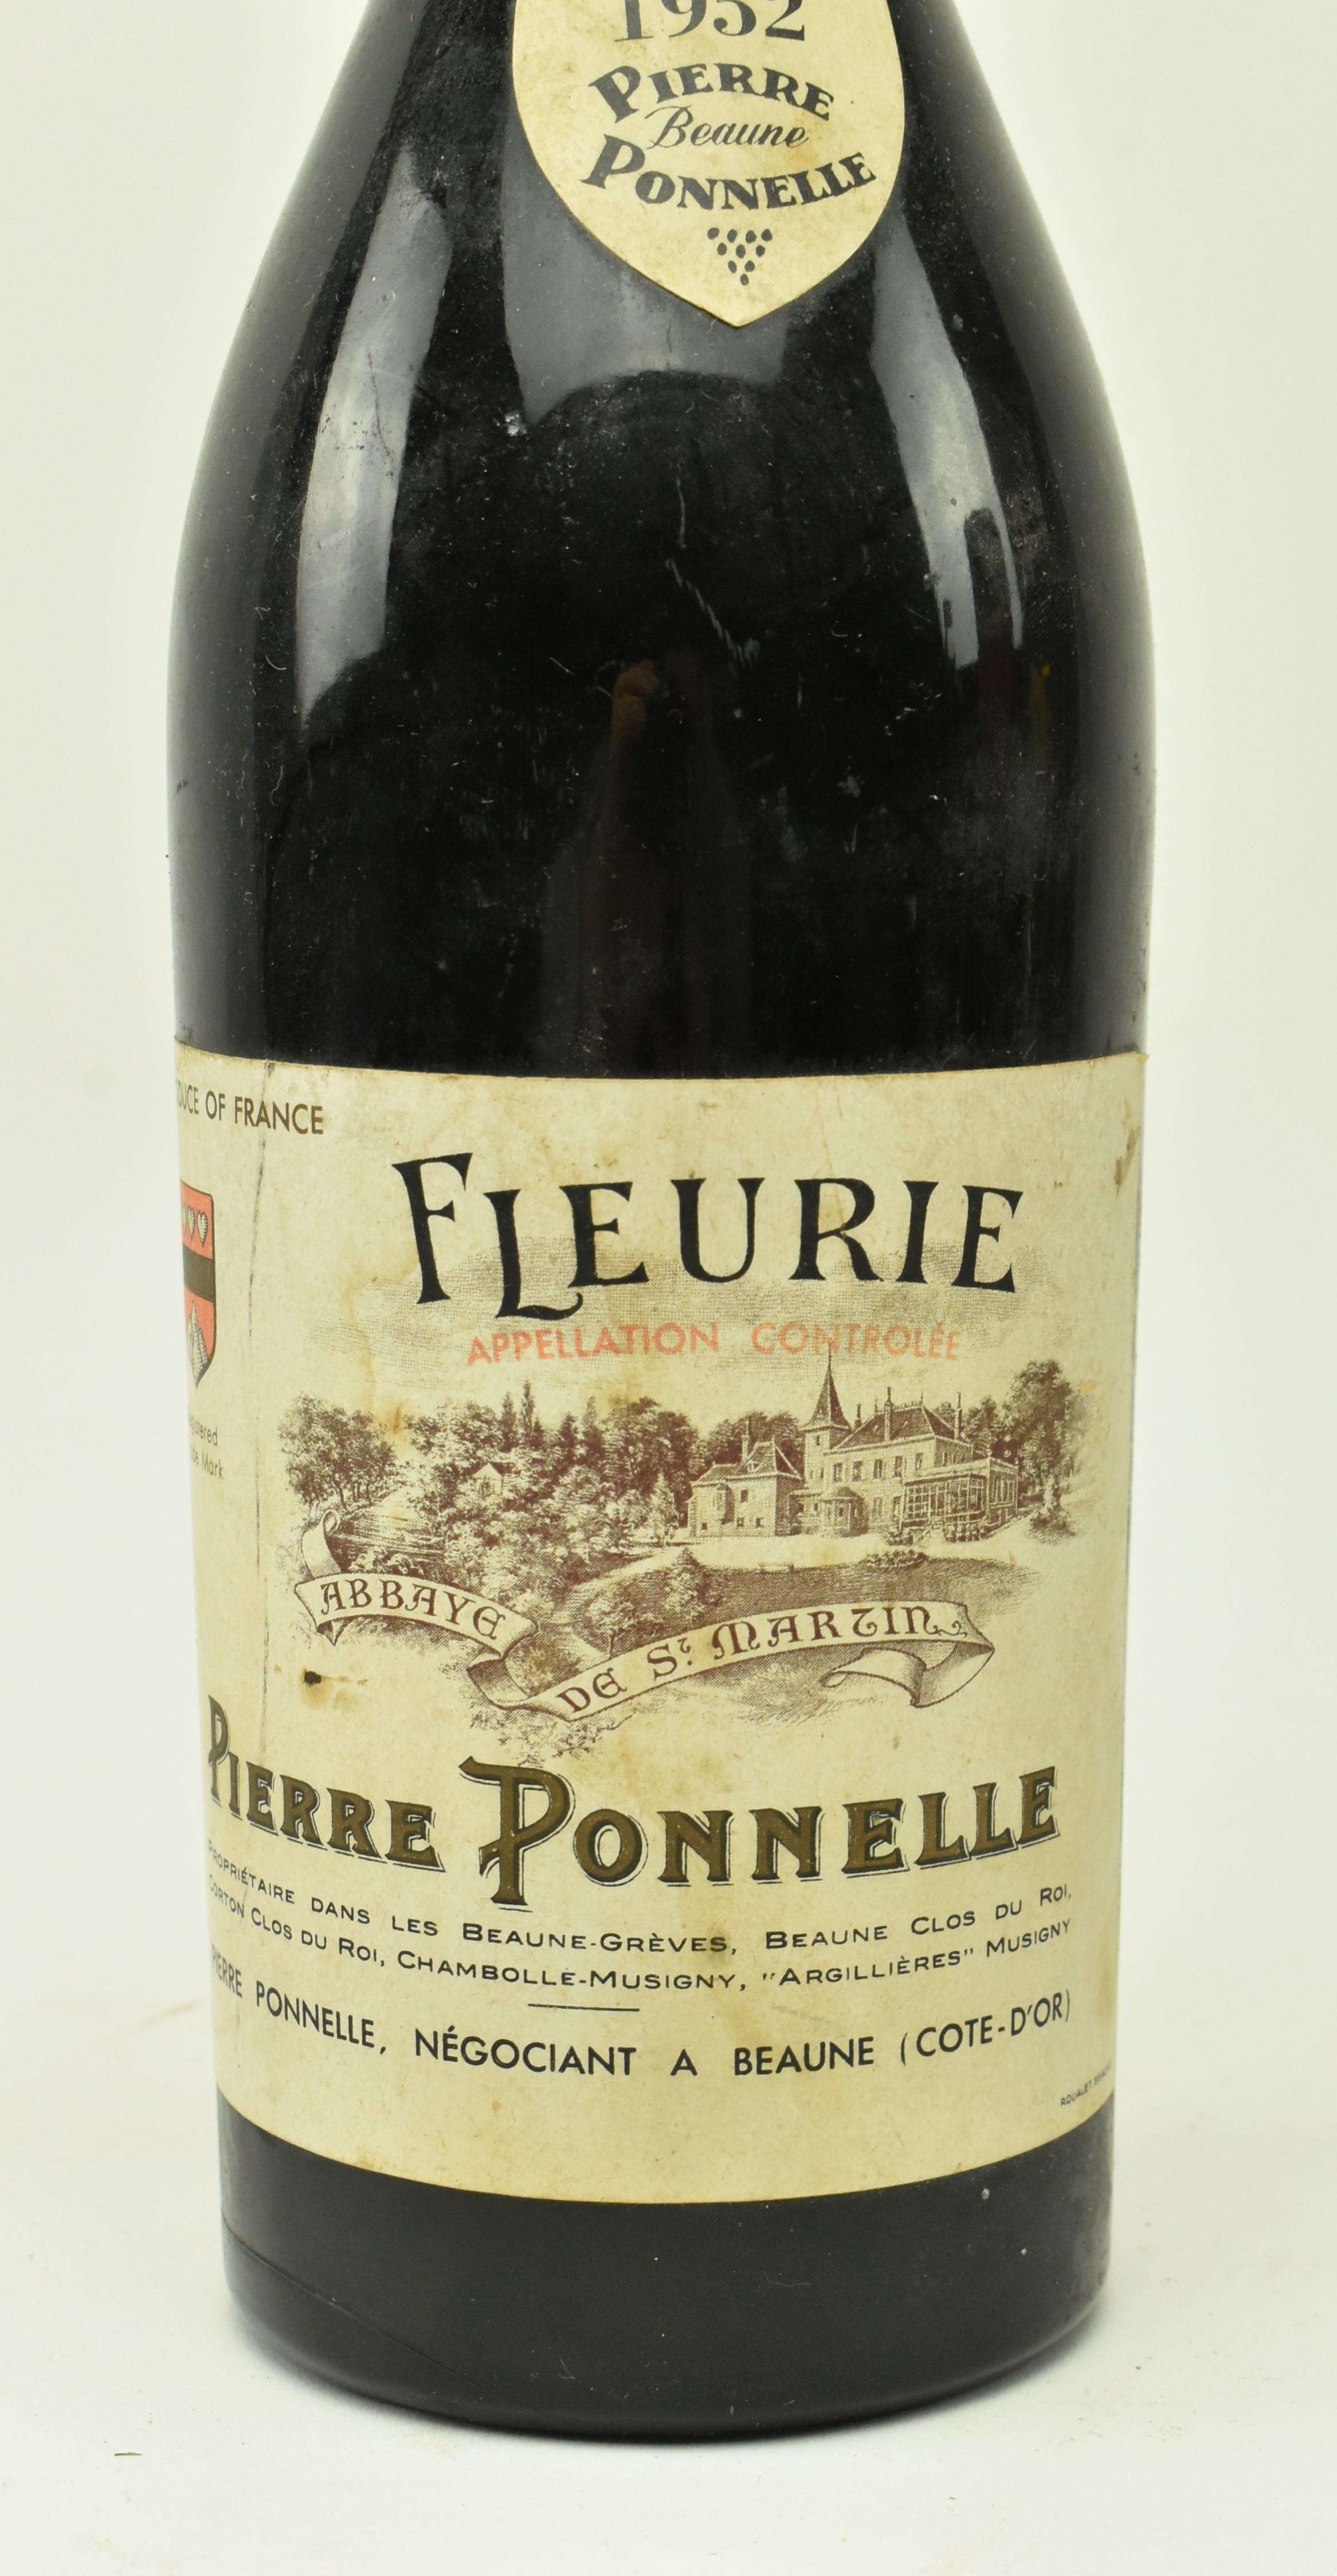 1952 PIERRE PONNELLE FLEURIE RED WINE BOTTLE - Image 4 of 6